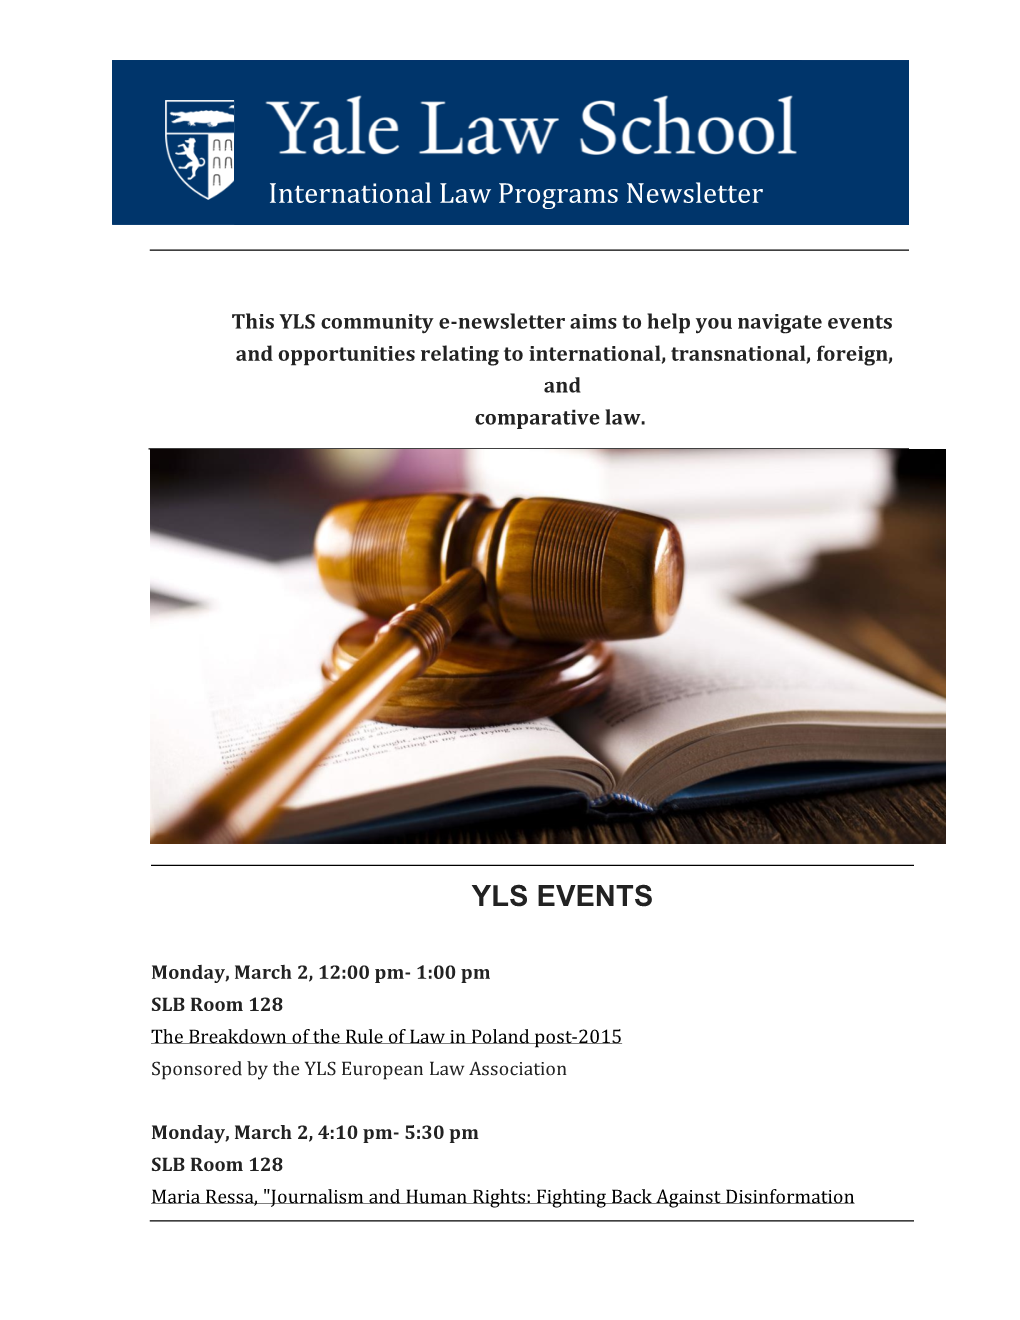 International Law Programs Newsletter YLS